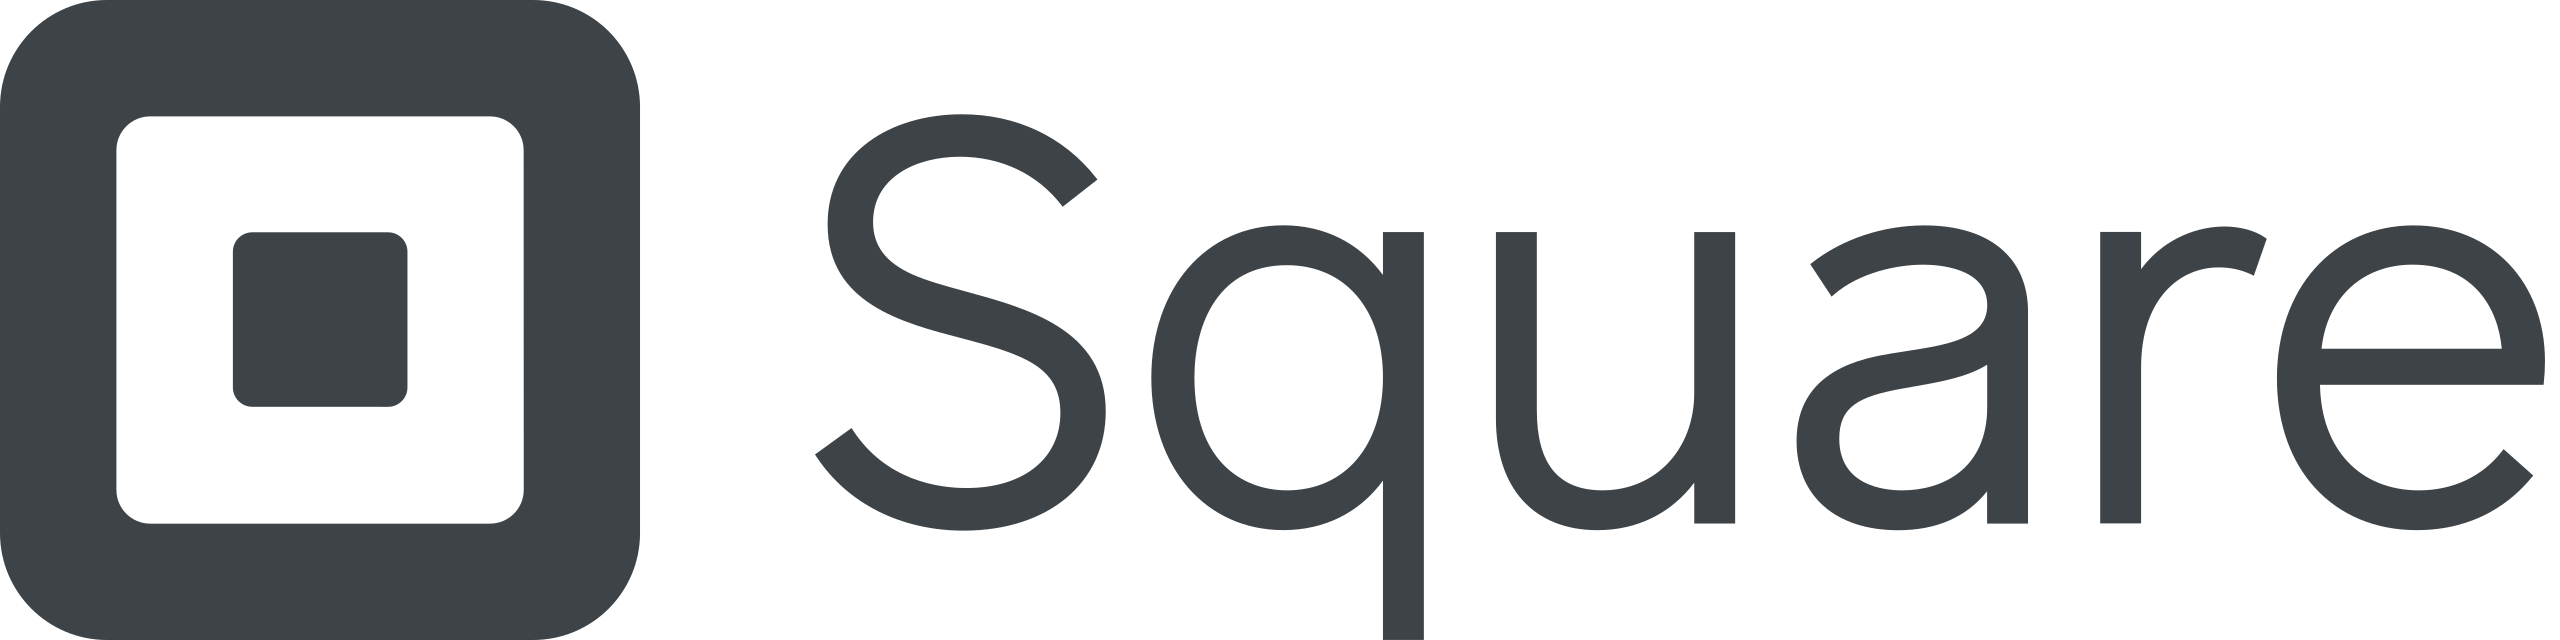 Square logo.